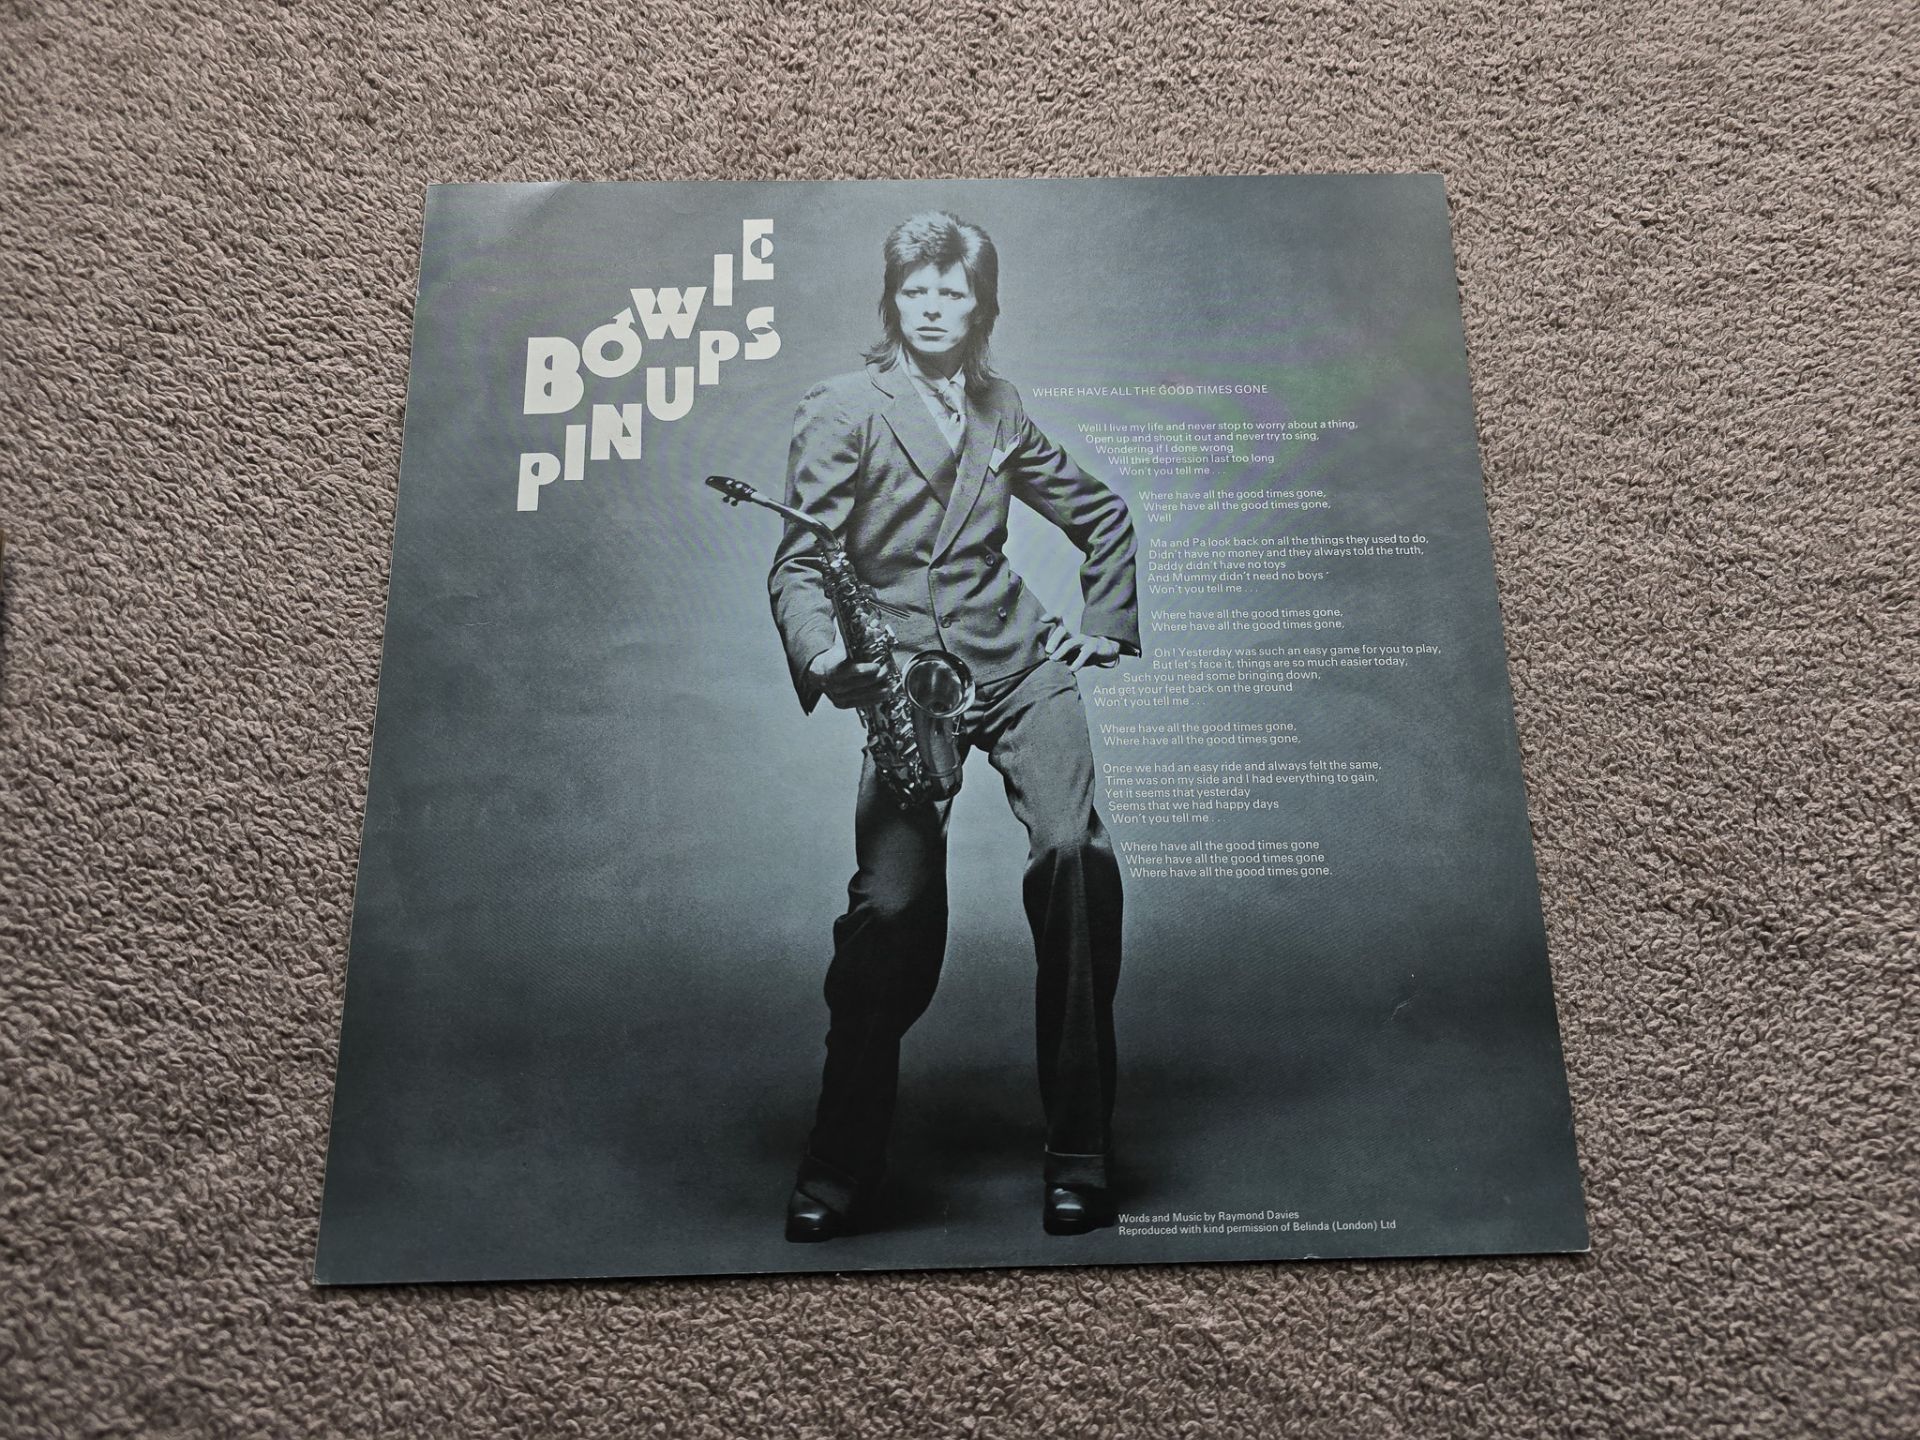 David Bowie Pinups Mainman Original UK Vinyl LP + Insert - Image 5 of 7